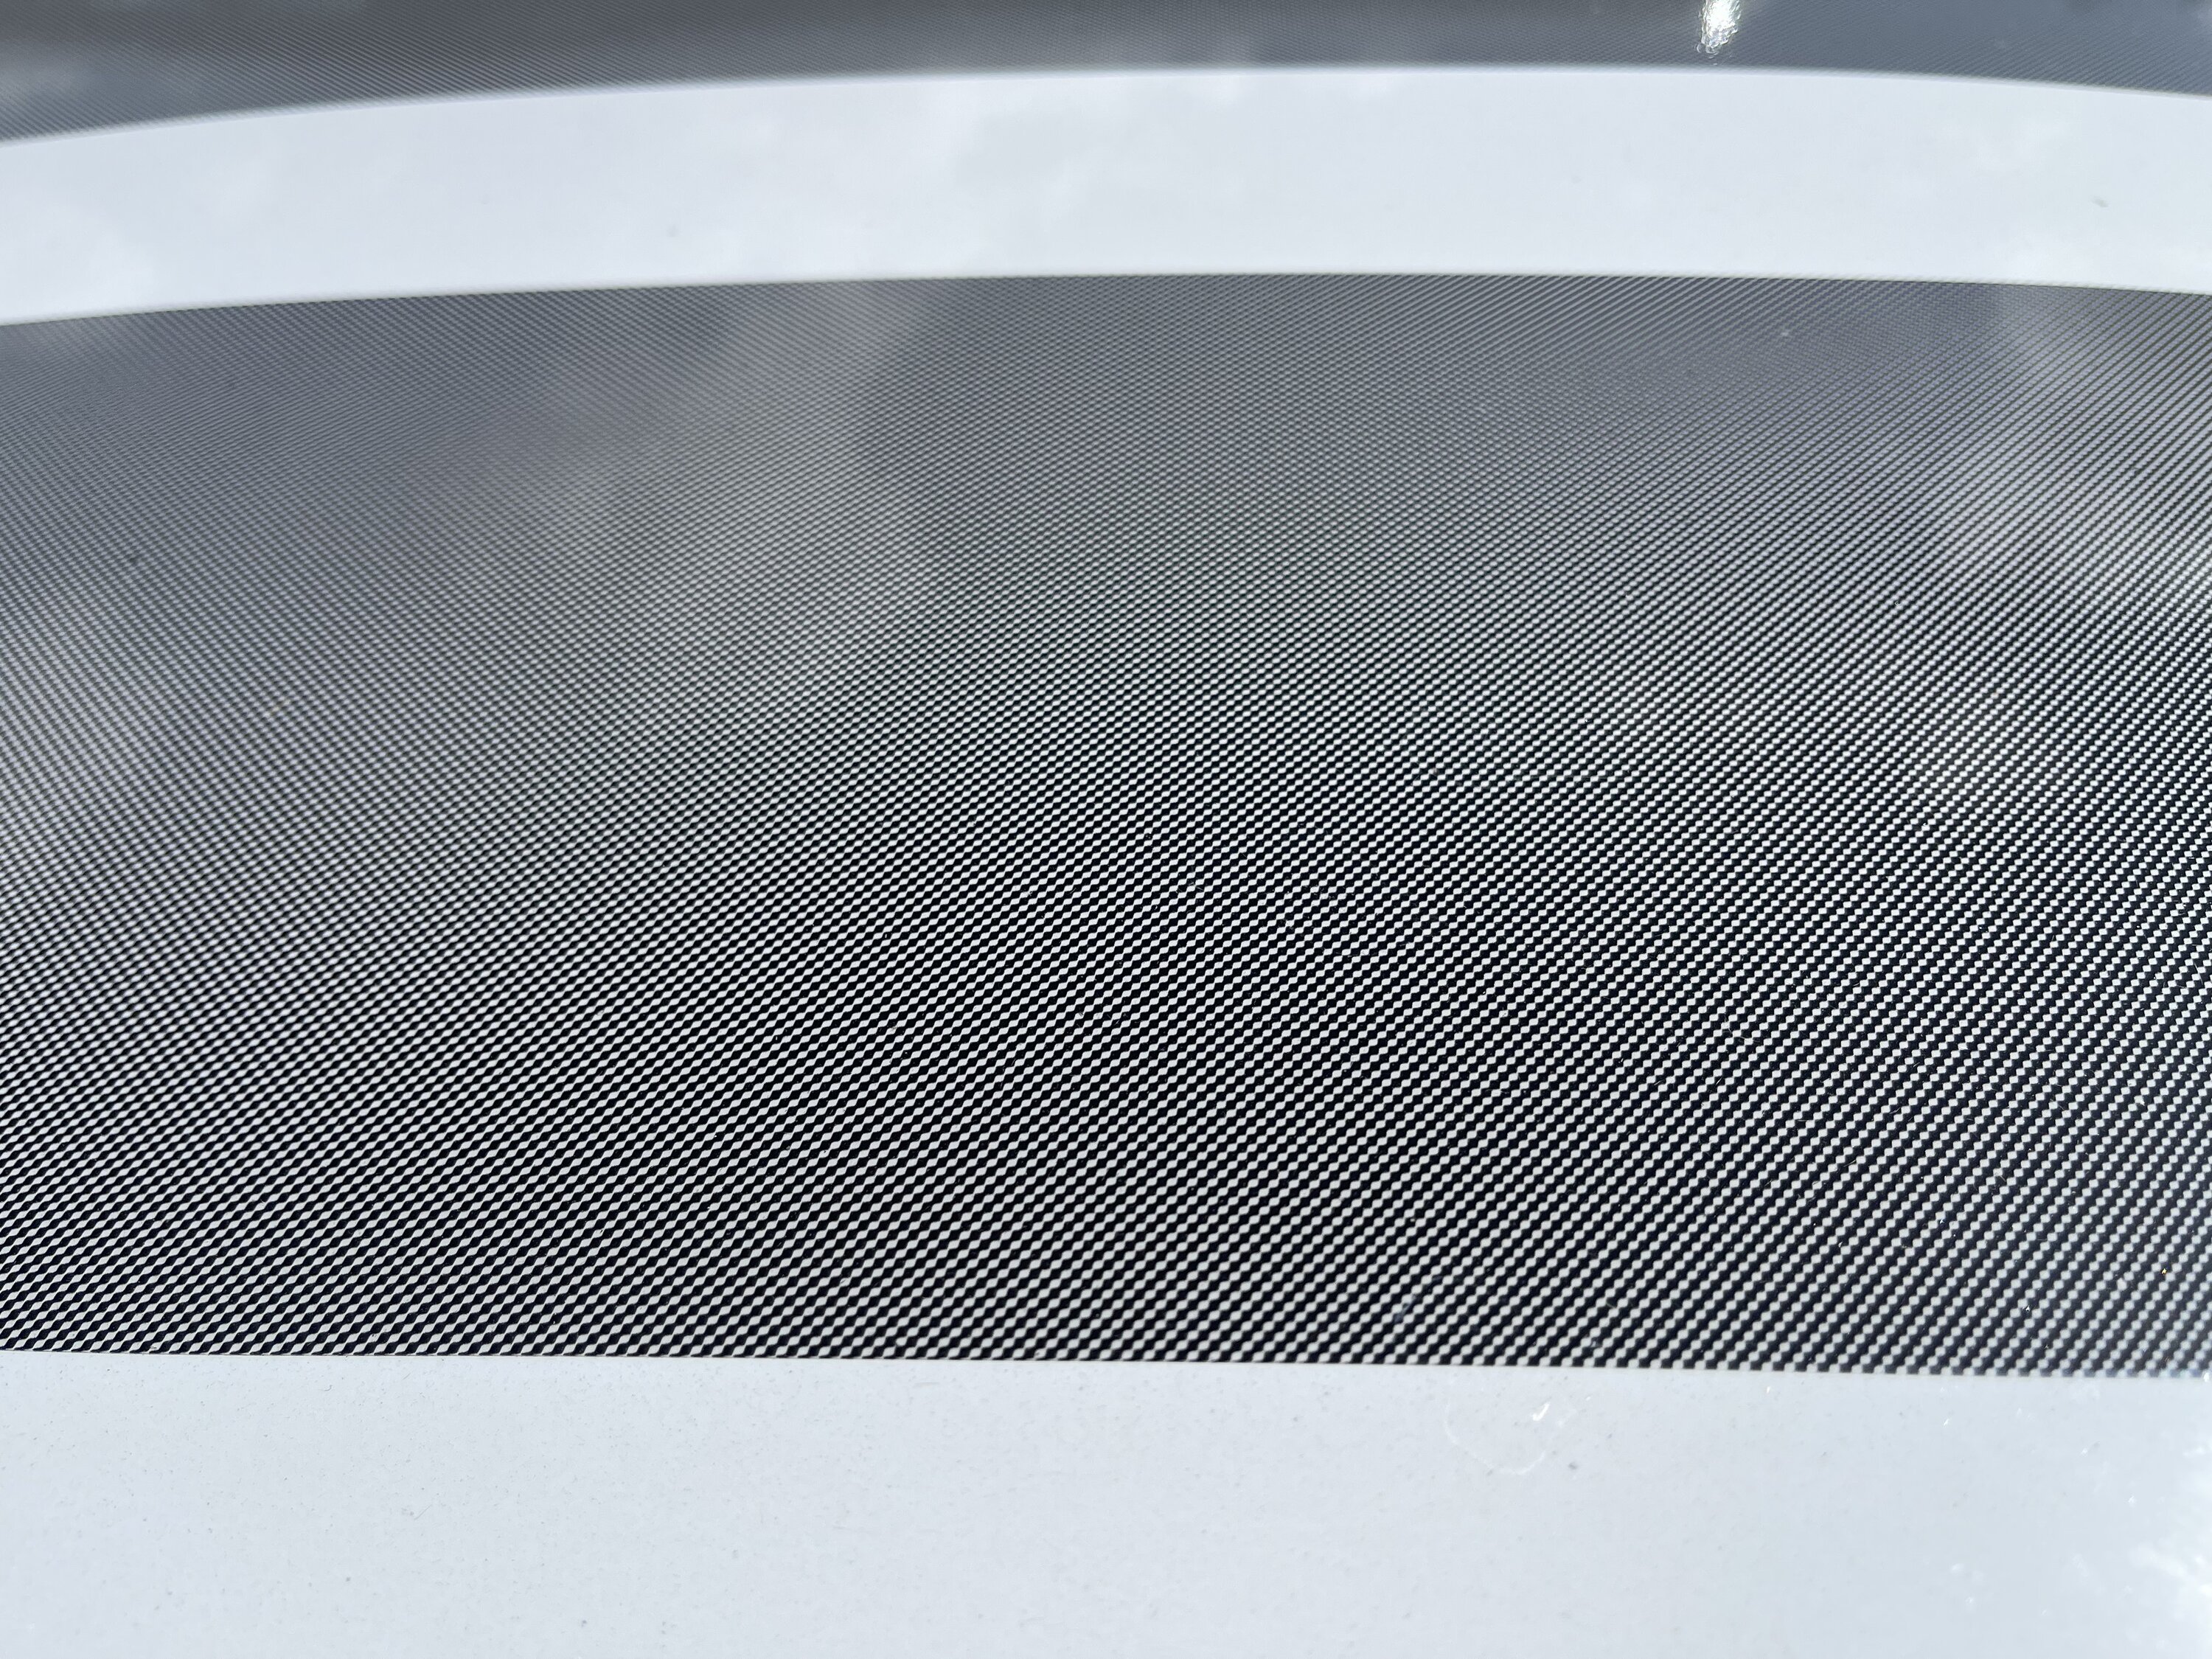 S650 Mustang Opaque factory stripes closeup photos IMG_1780